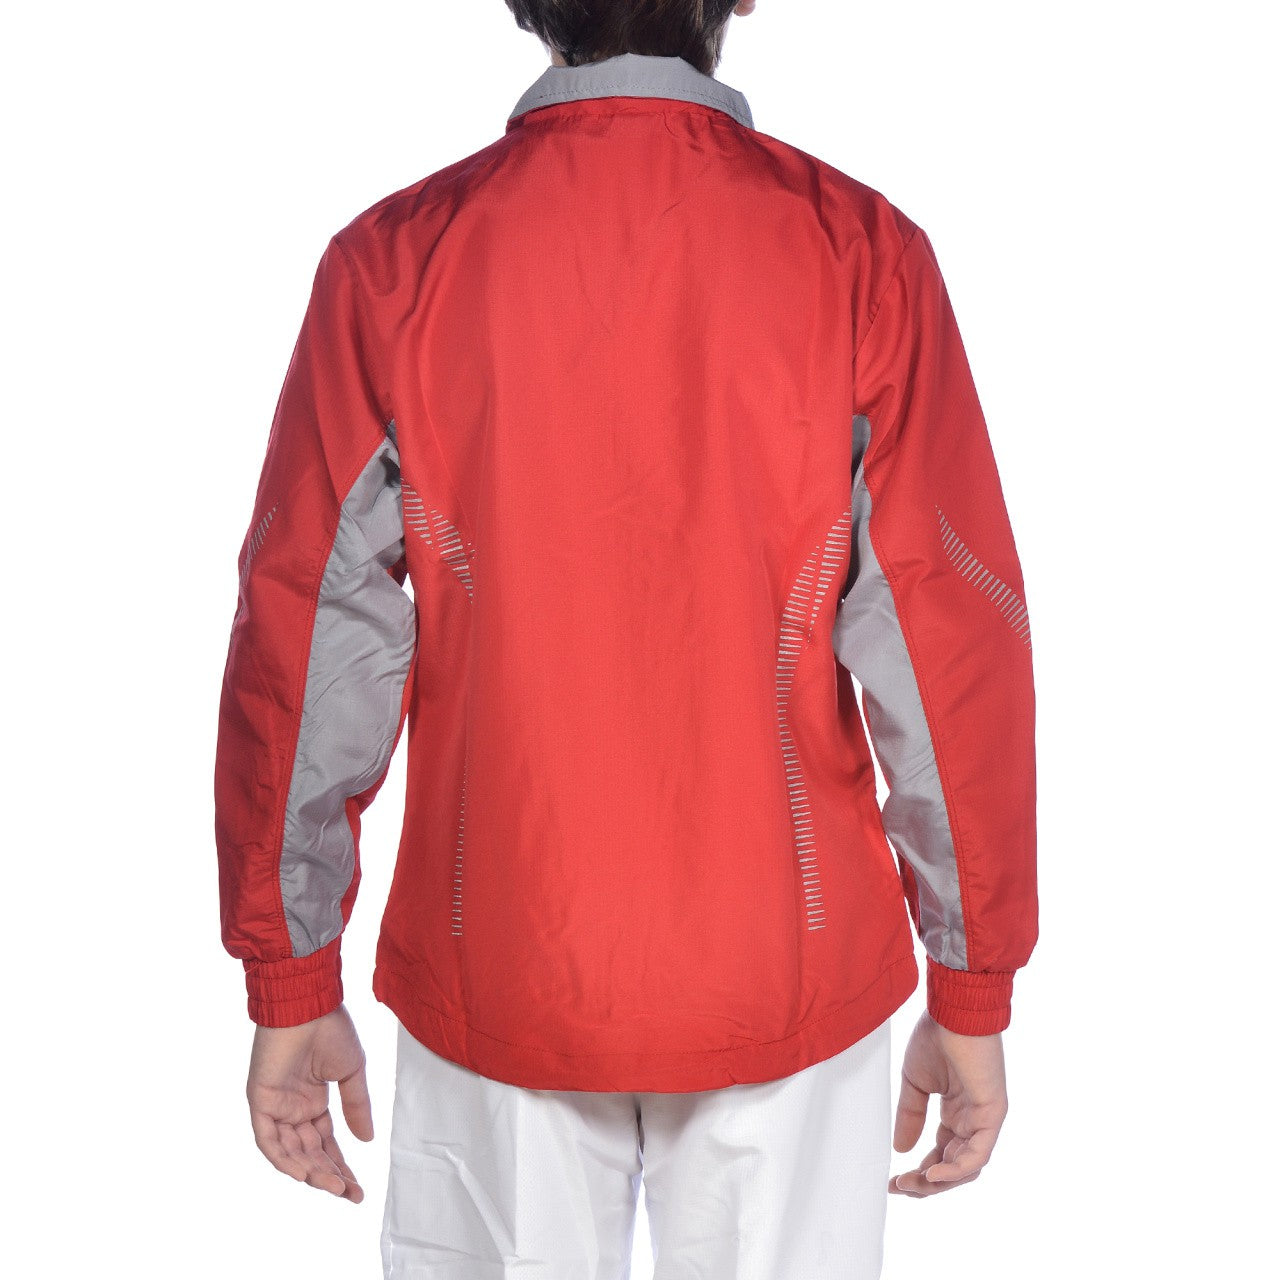 Jr Tl Warm Up Jacket red/grey